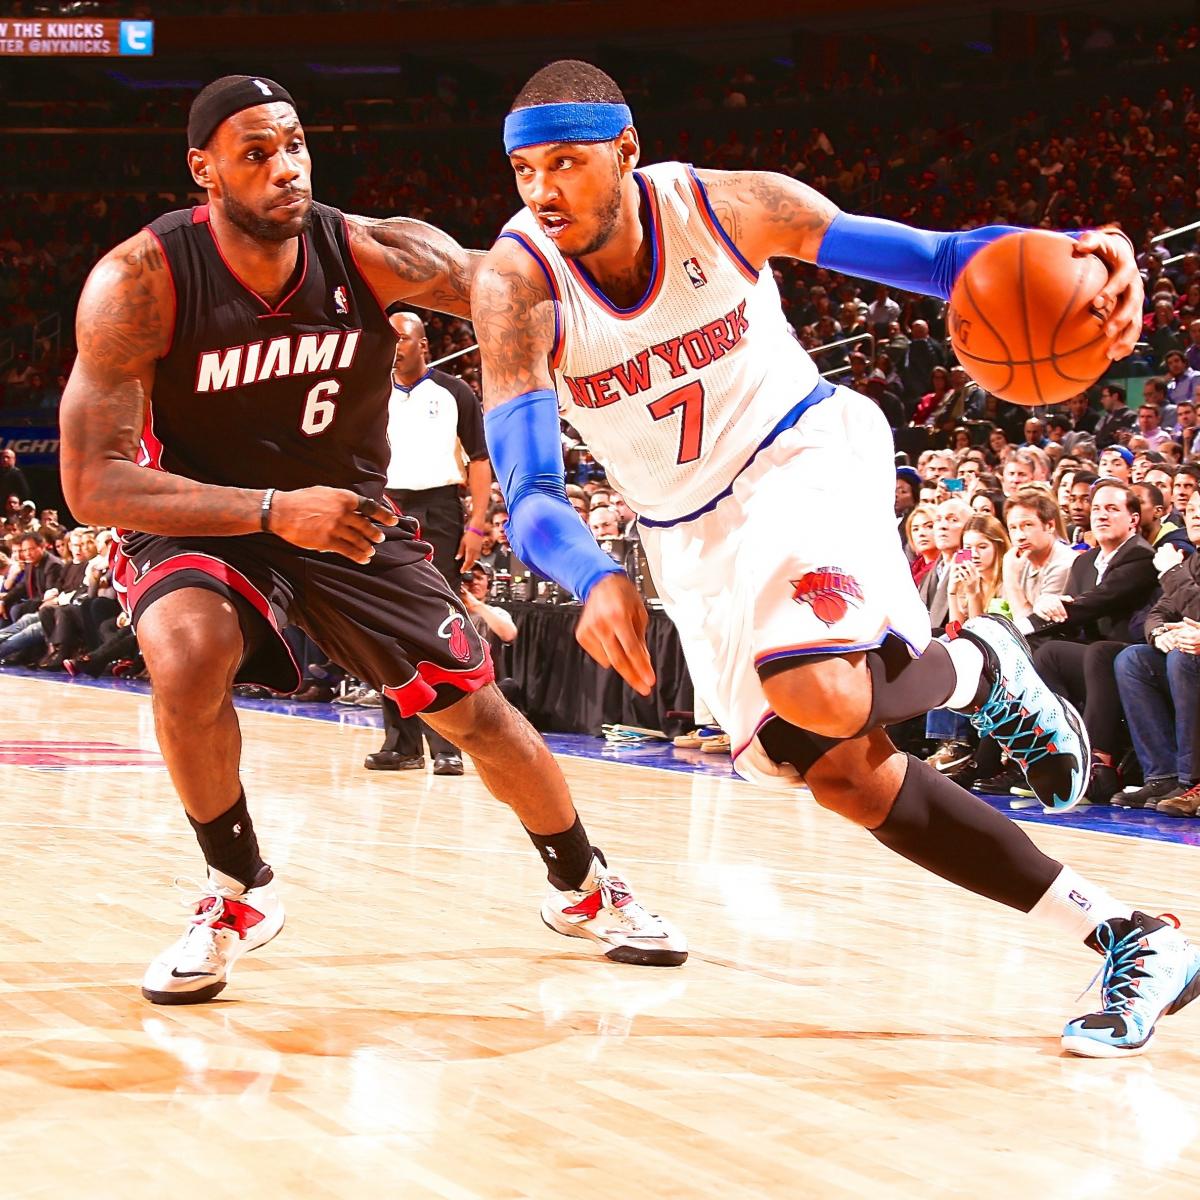 Miami Heat vs. New York Knicks Live Score and Analysis News, Scores